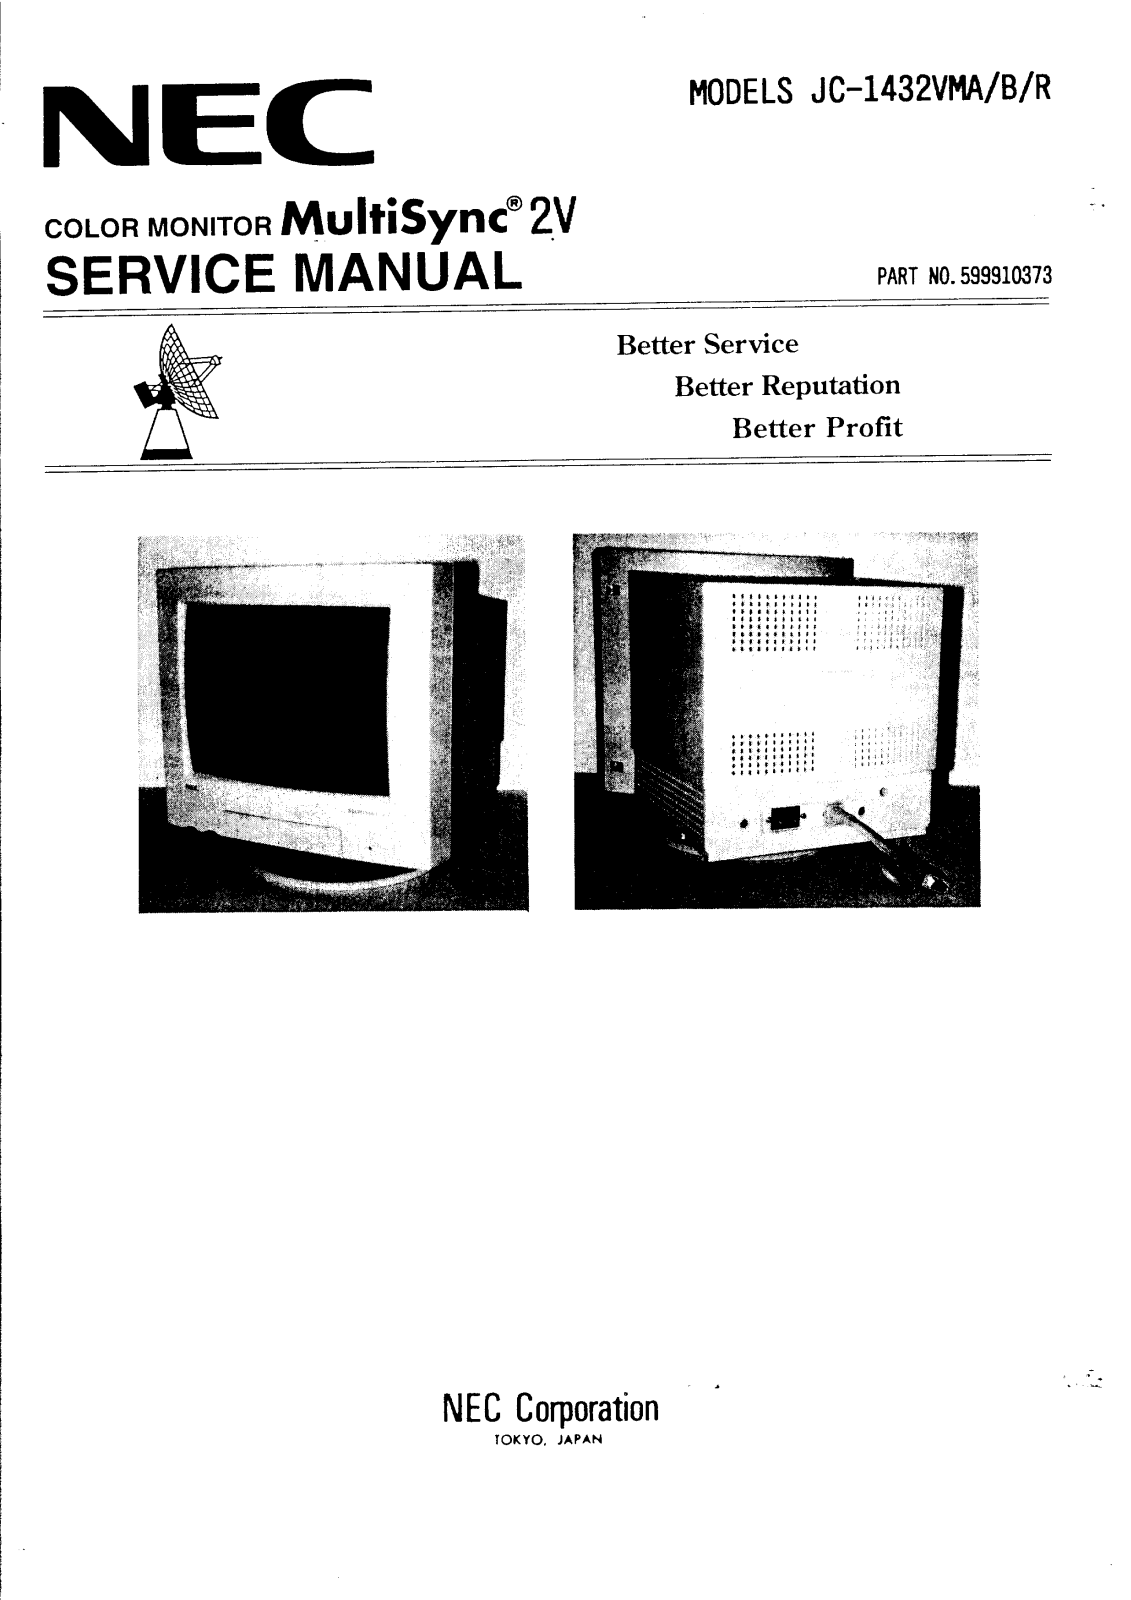 NEC JC1432vma, JC1432vmb, JC1432vmR Service Manual